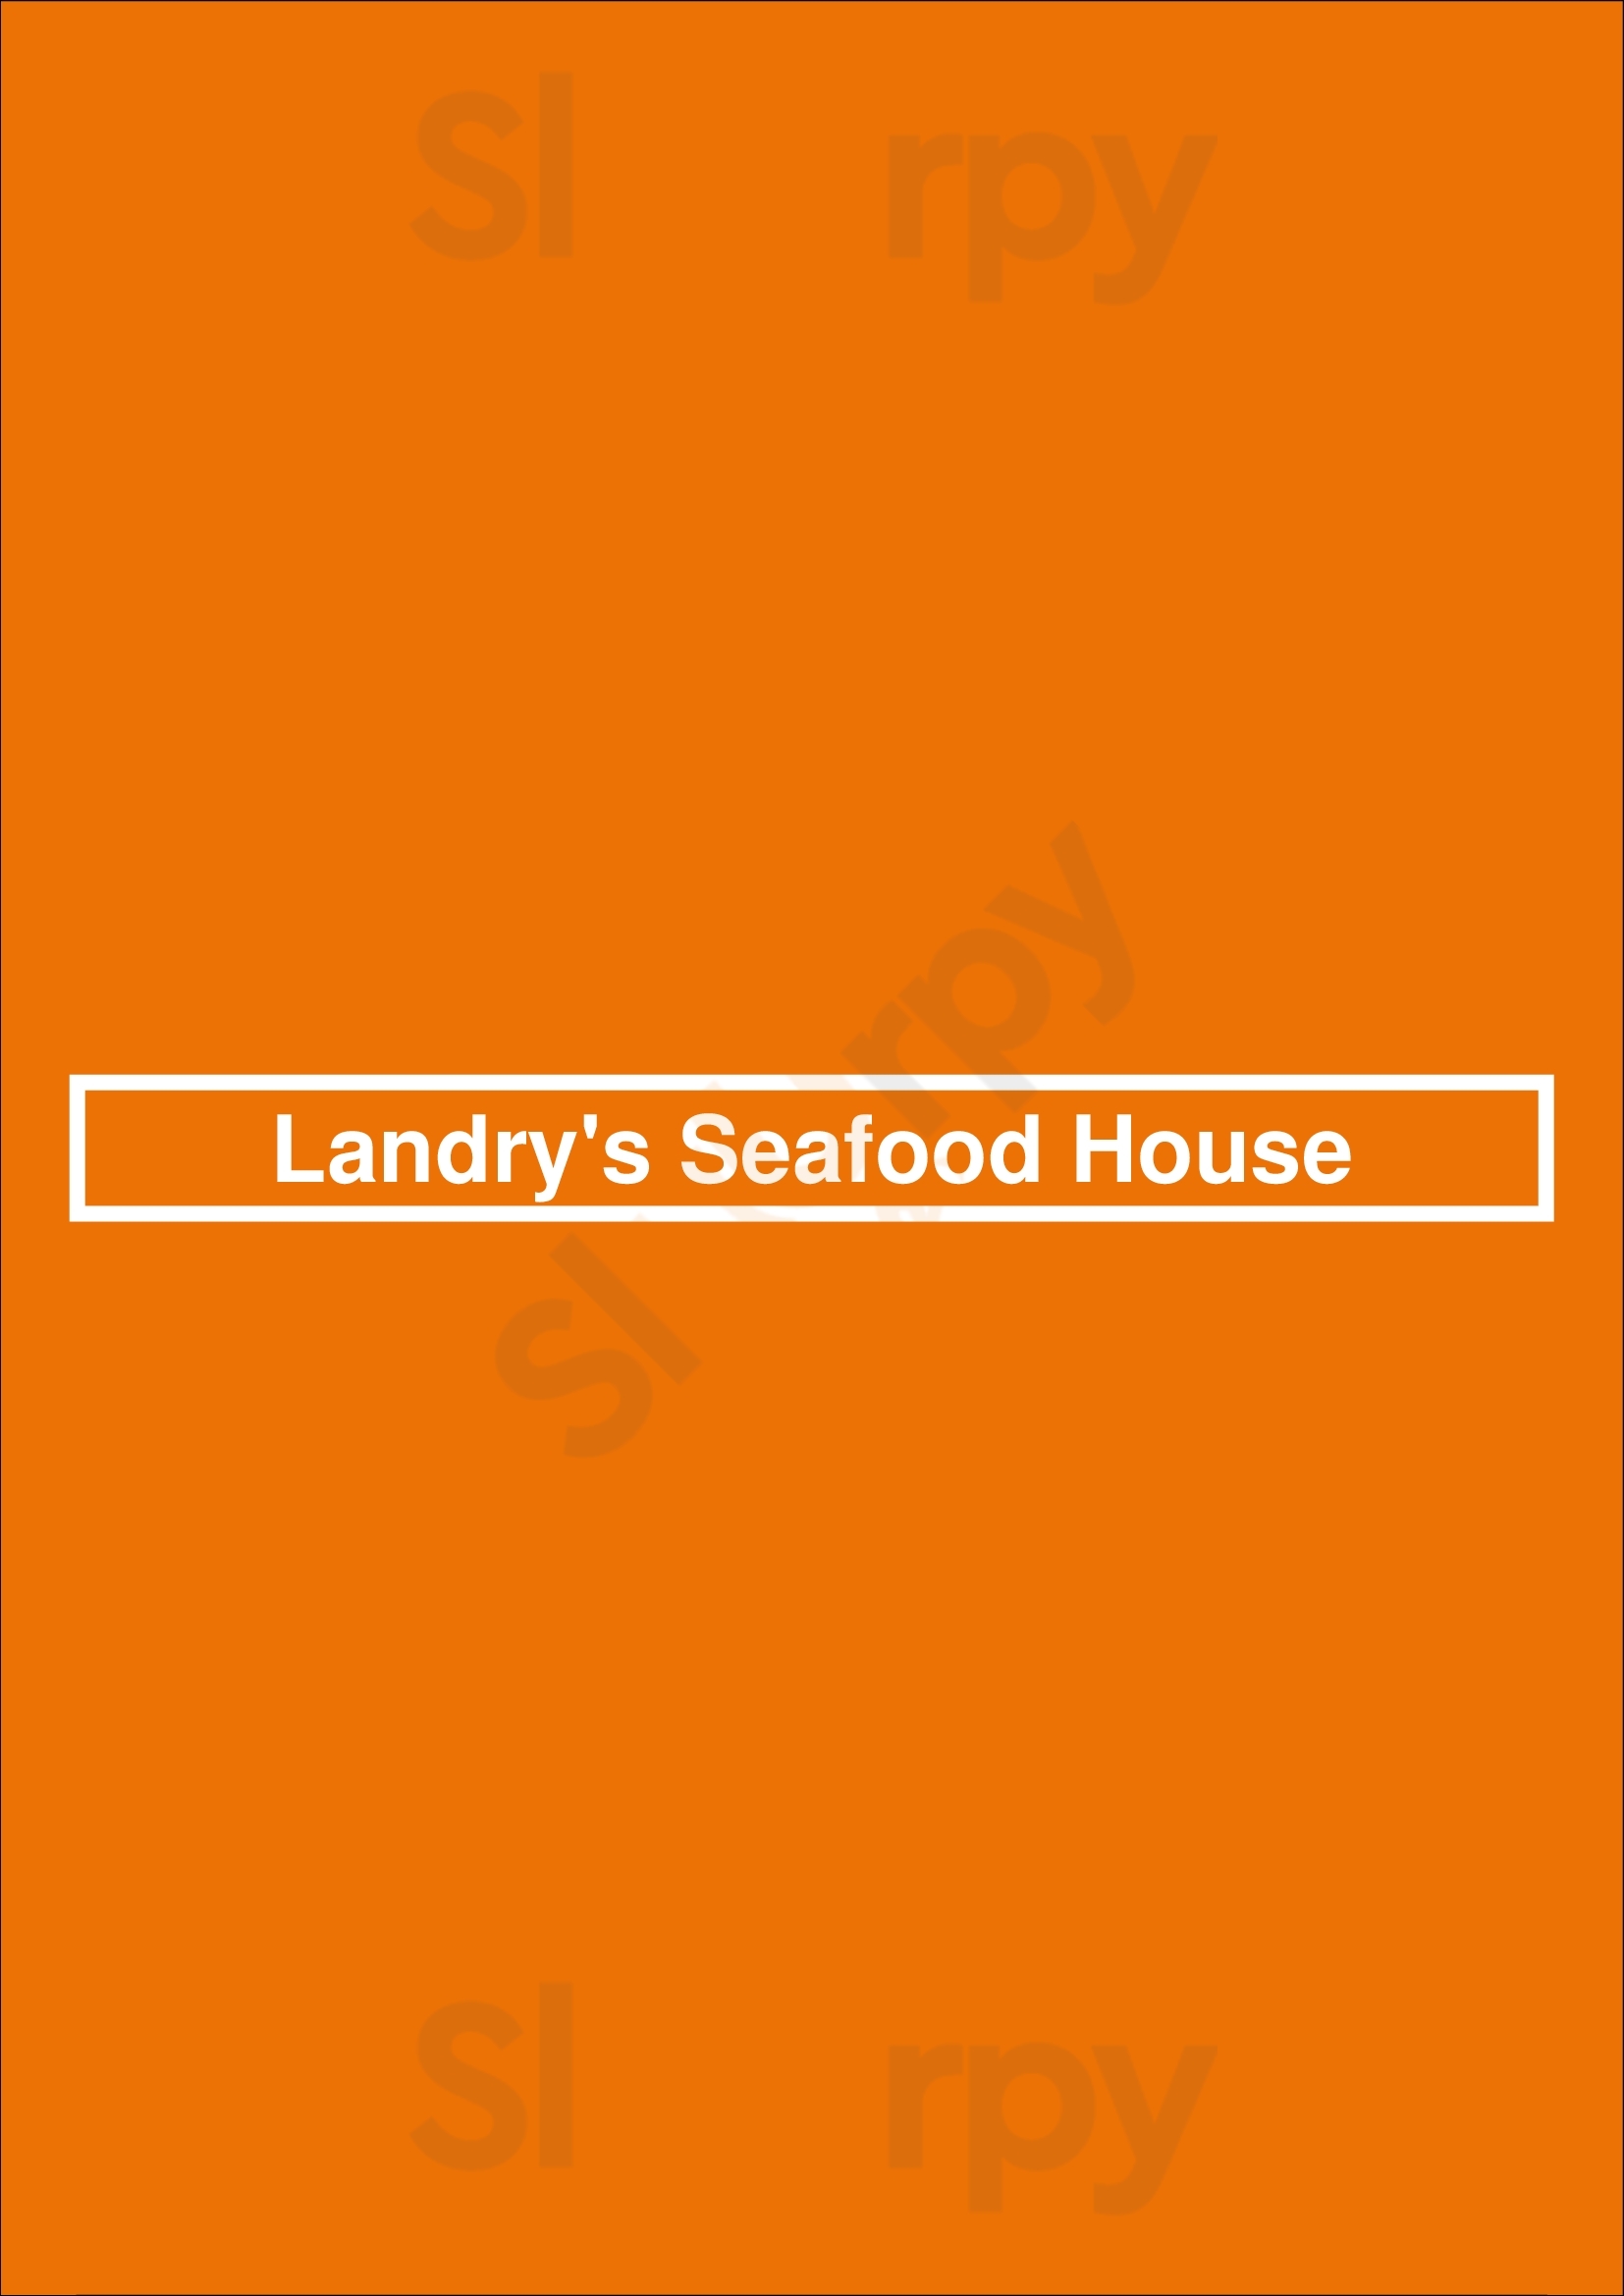 Landry's Seafood House Saint Louis Menu - 1